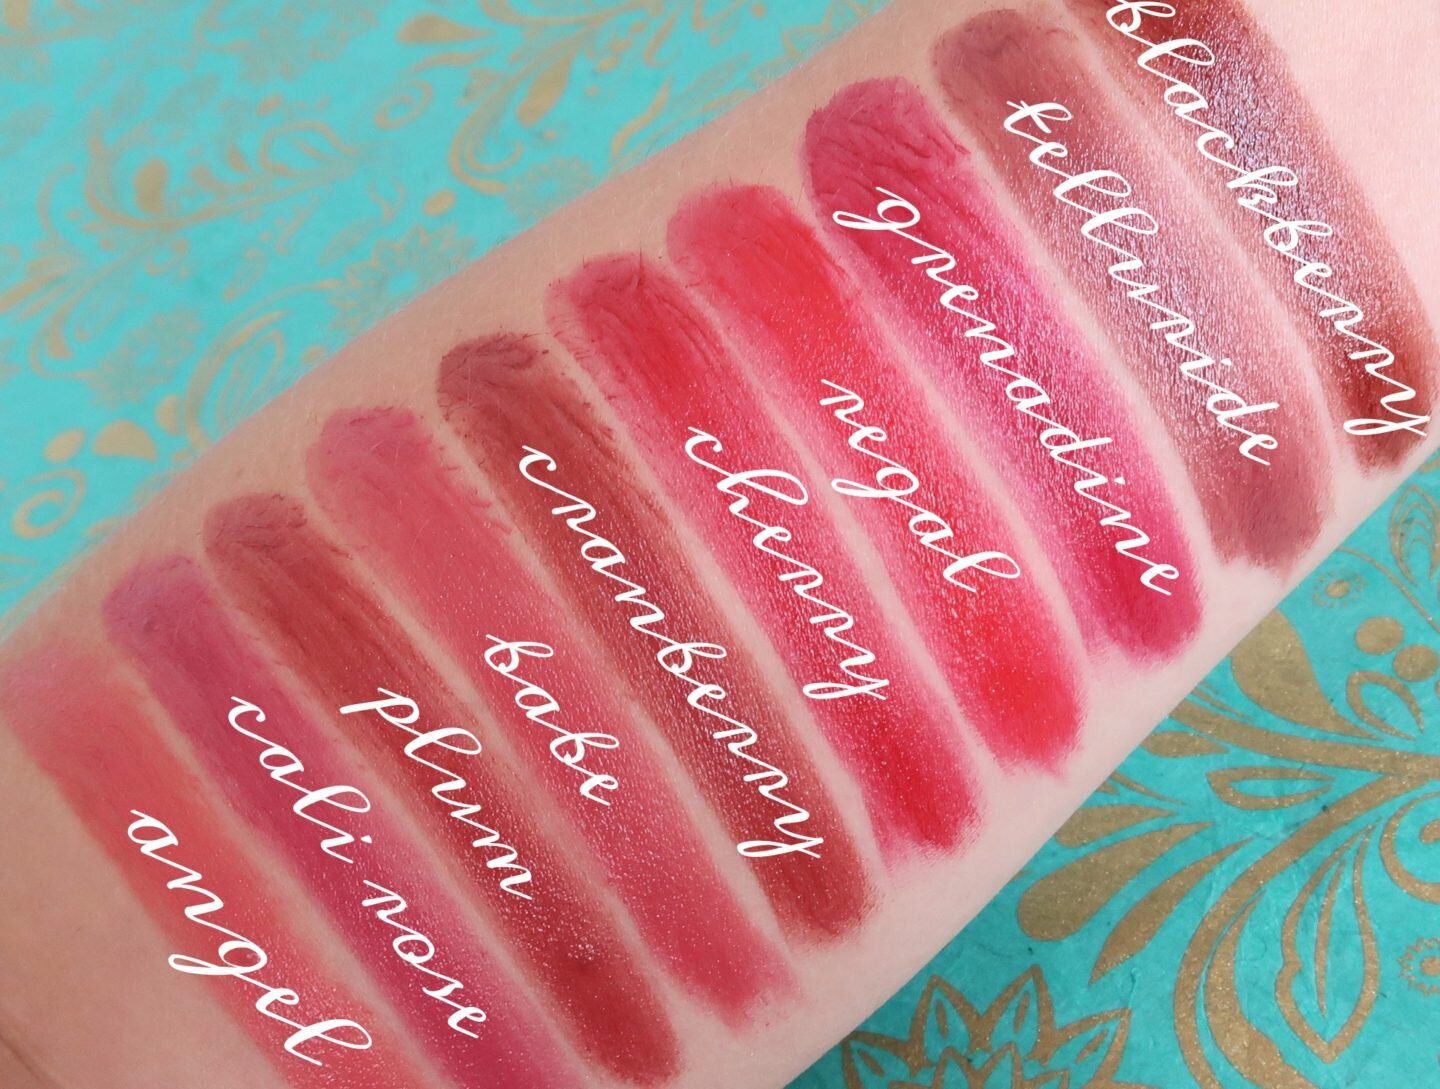 bobbie brown crush lipstick swatches reds